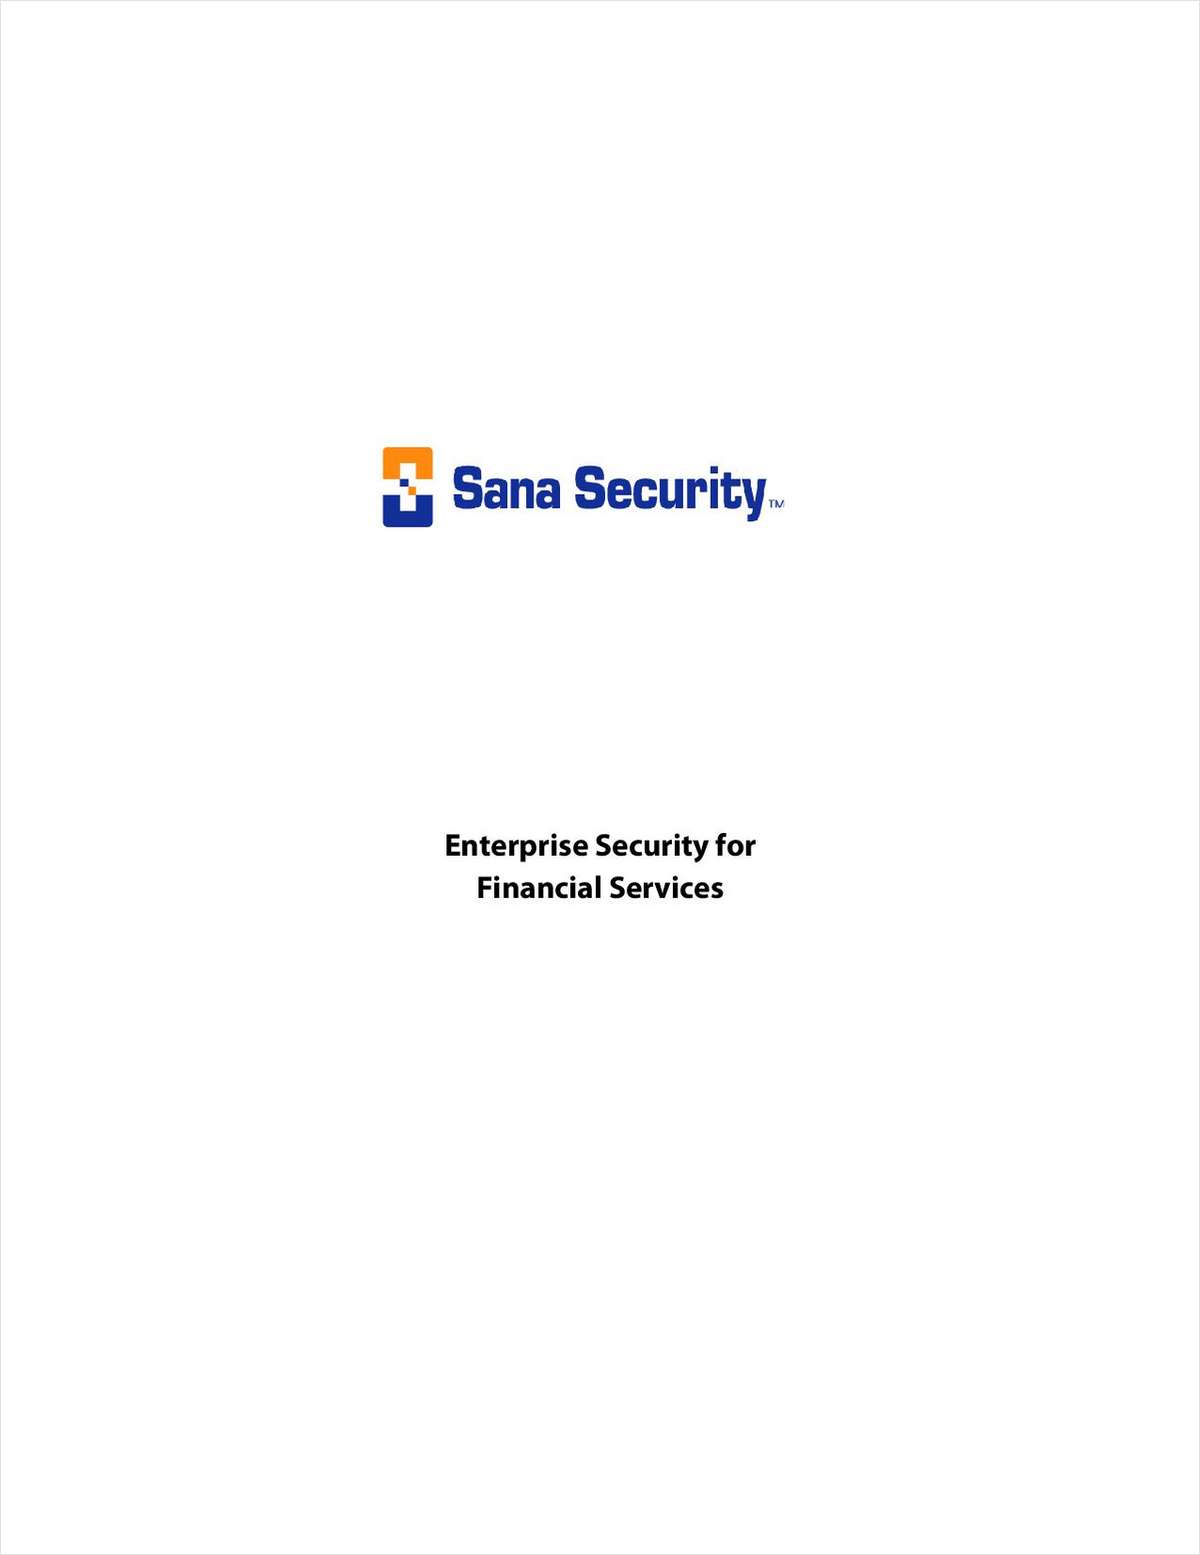 Enterprise Security for Financial Services